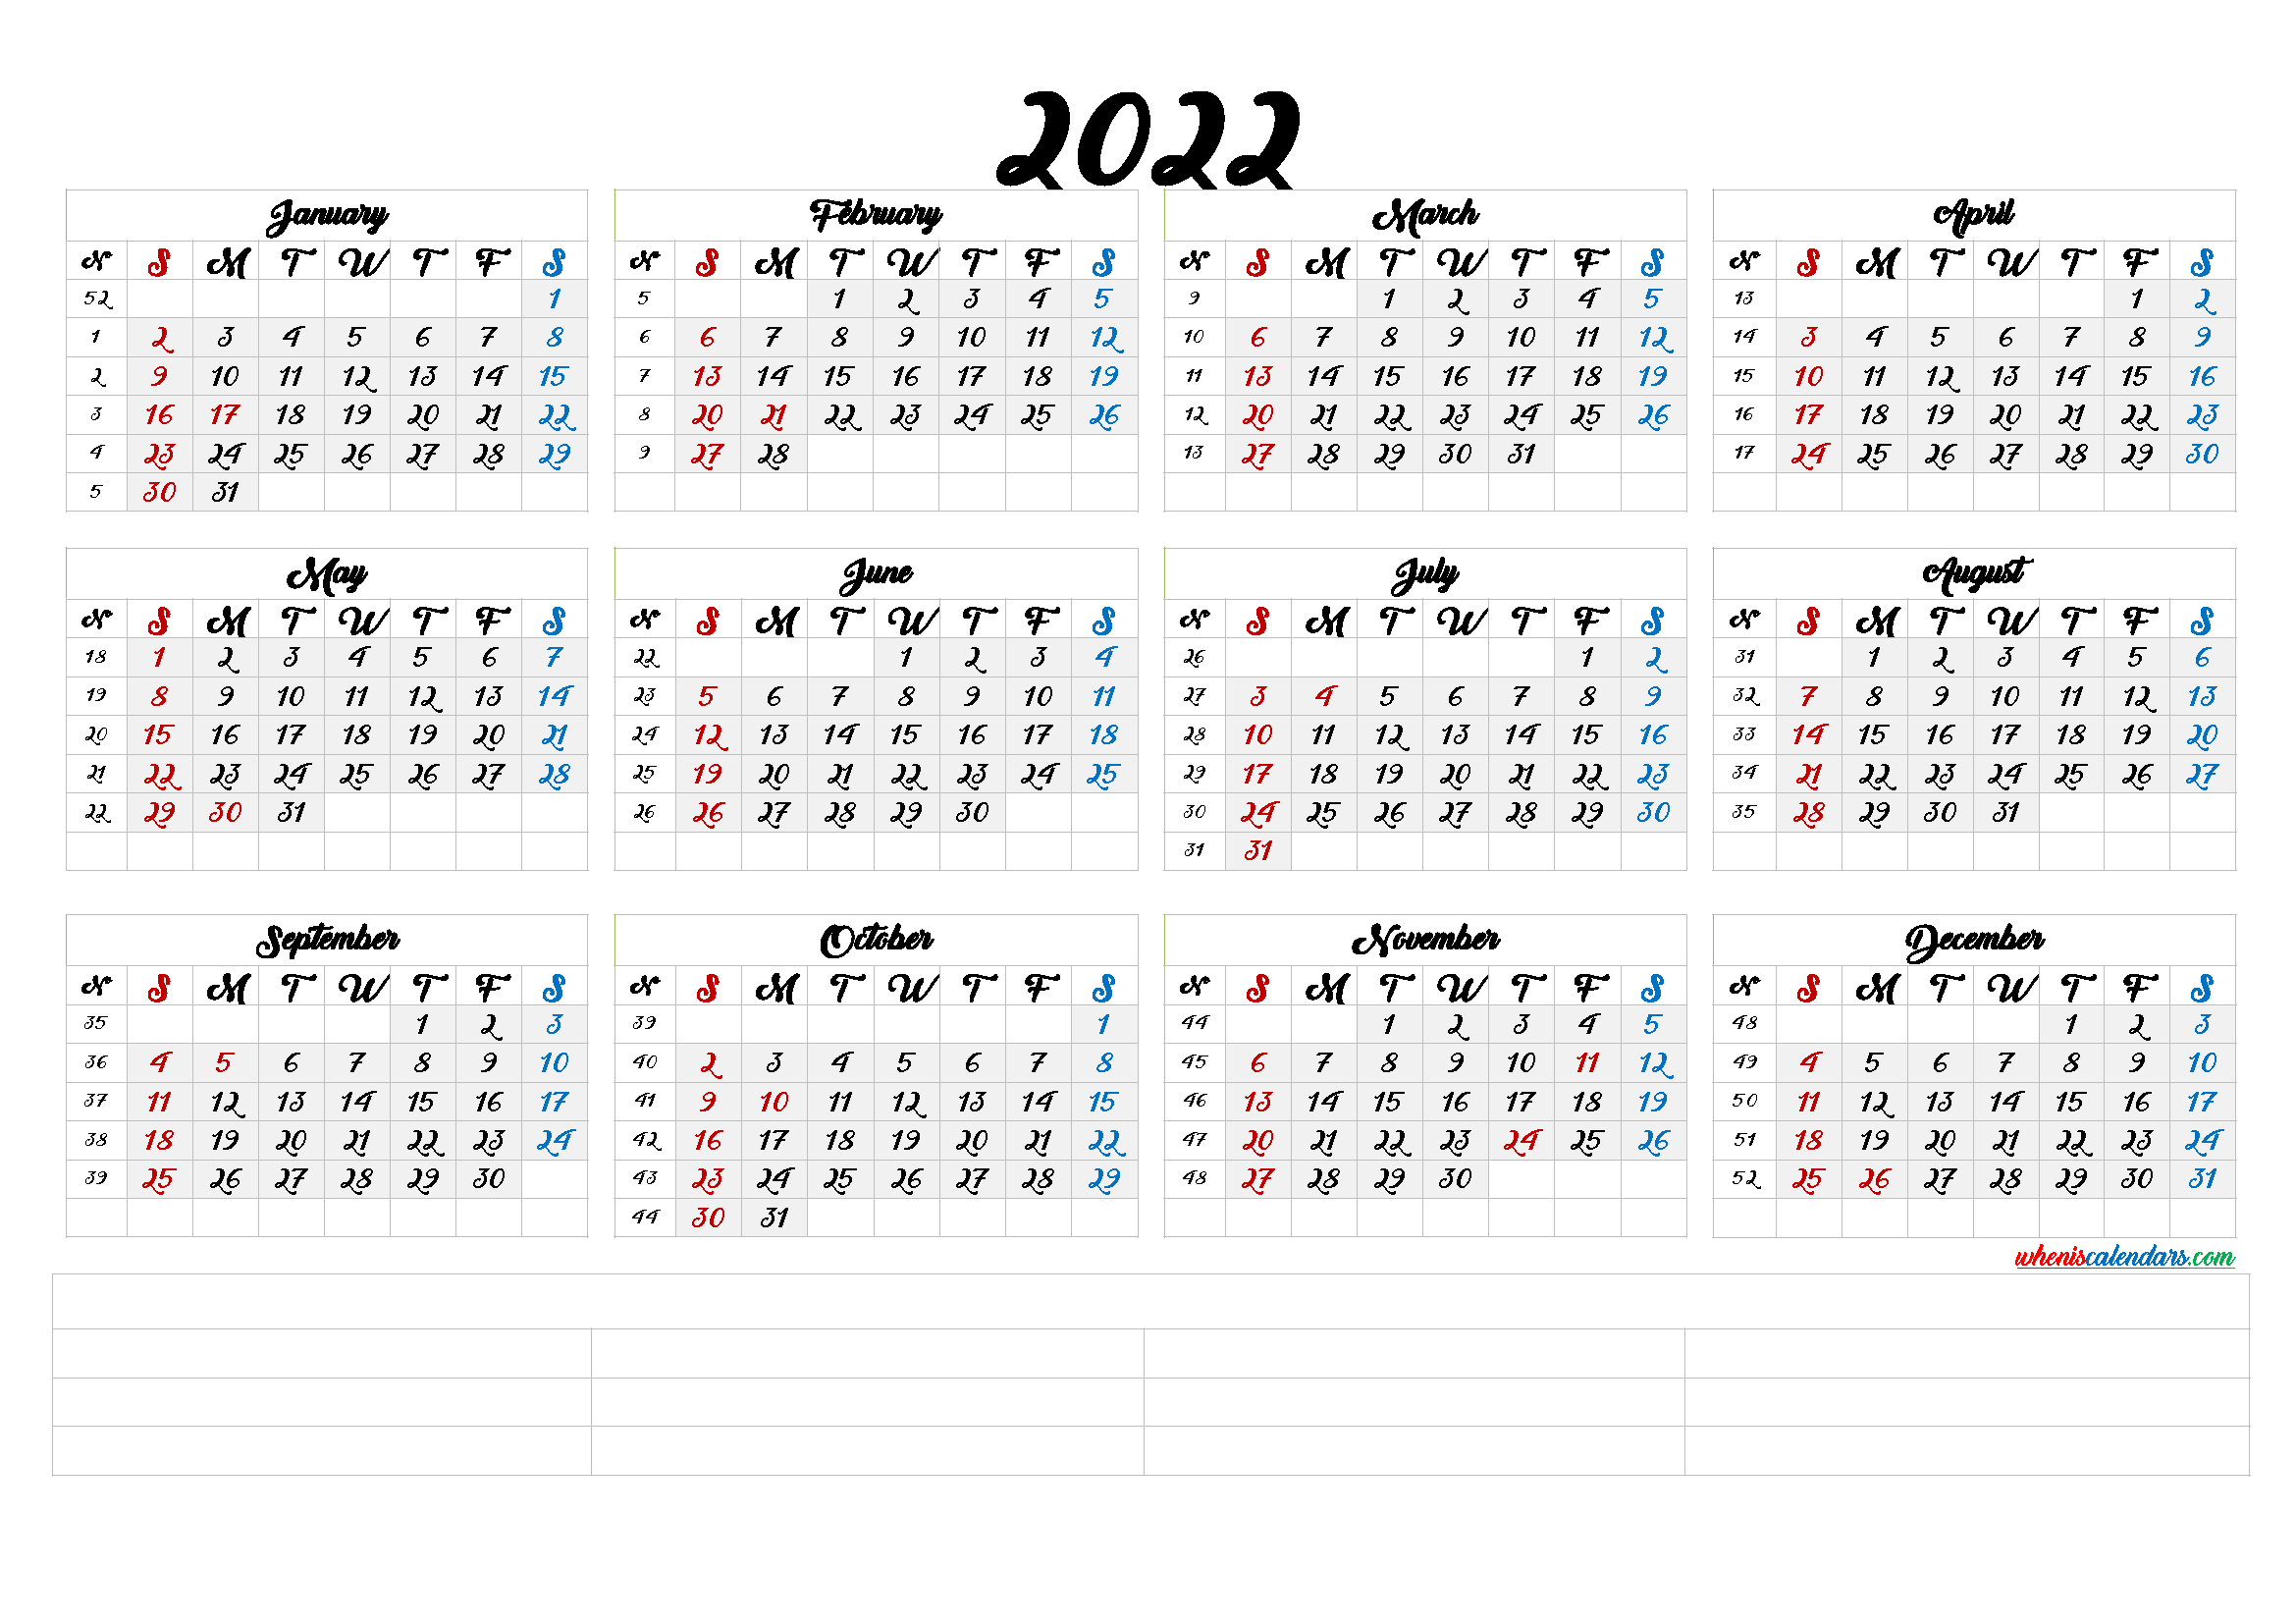 Rutgers Spring 2022 Academic Calendar Zack Blog